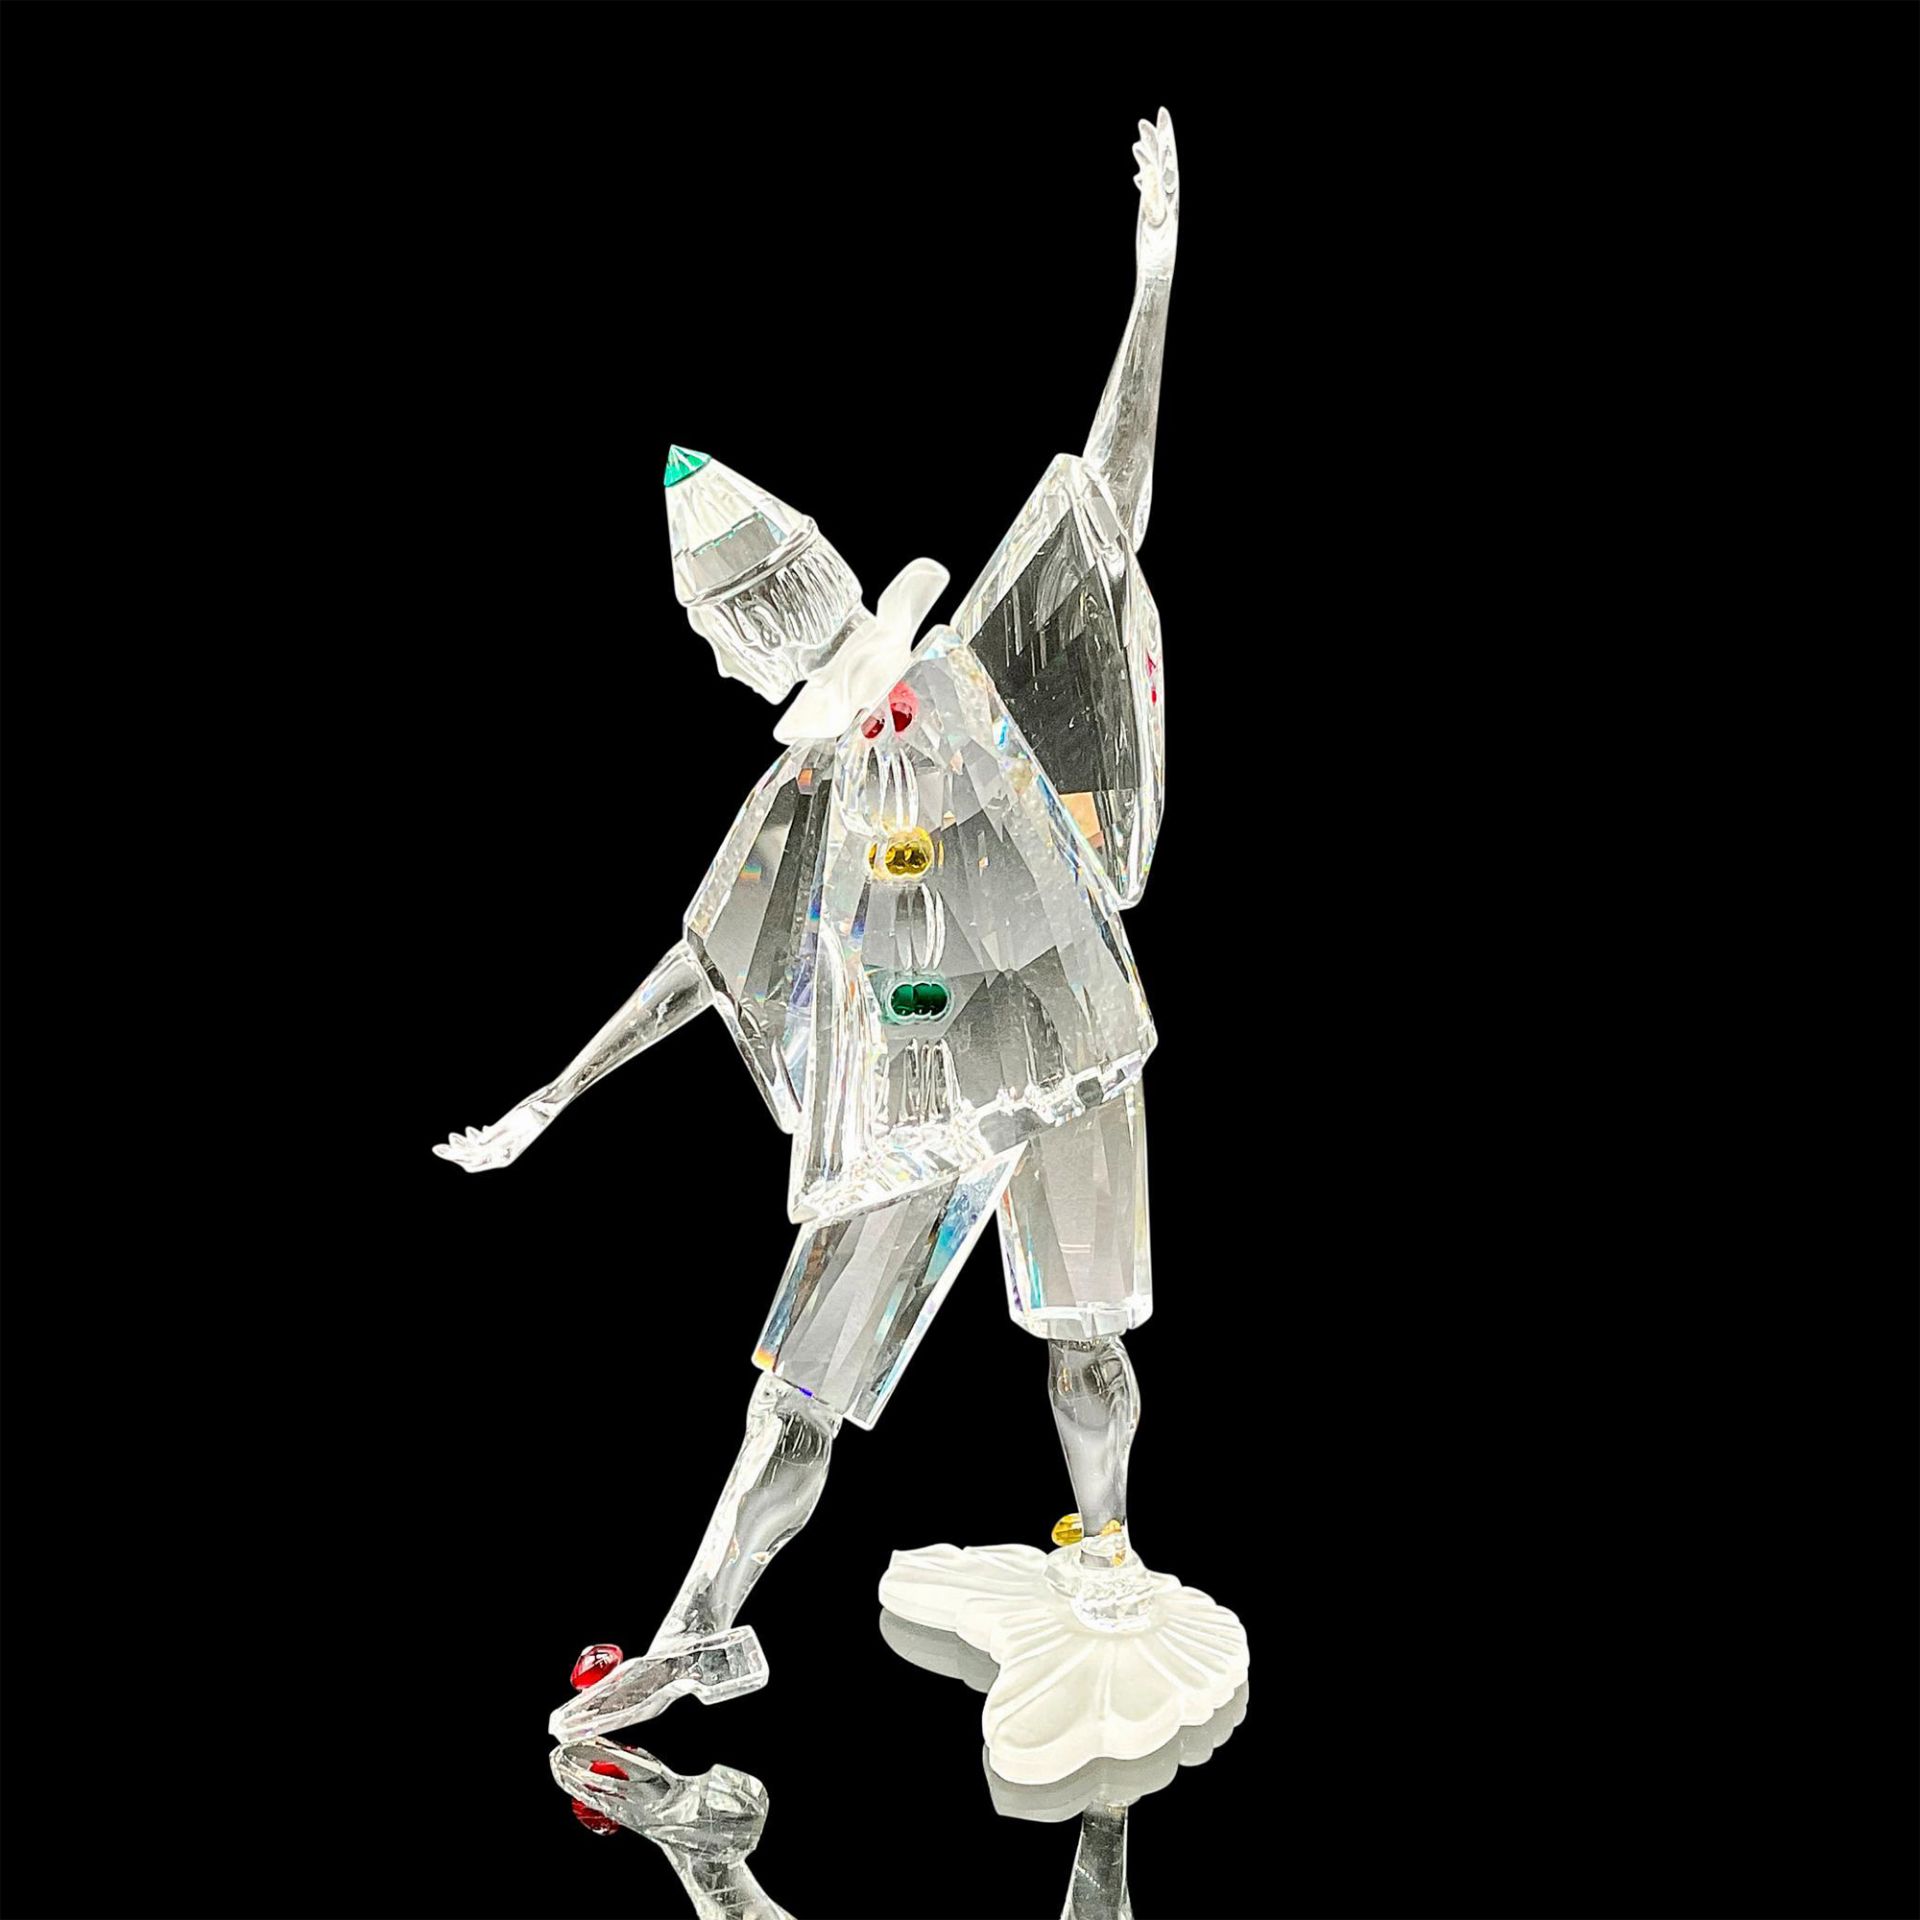 Swarovski SCS Crystal Figurine, Pierrot - Image 2 of 3